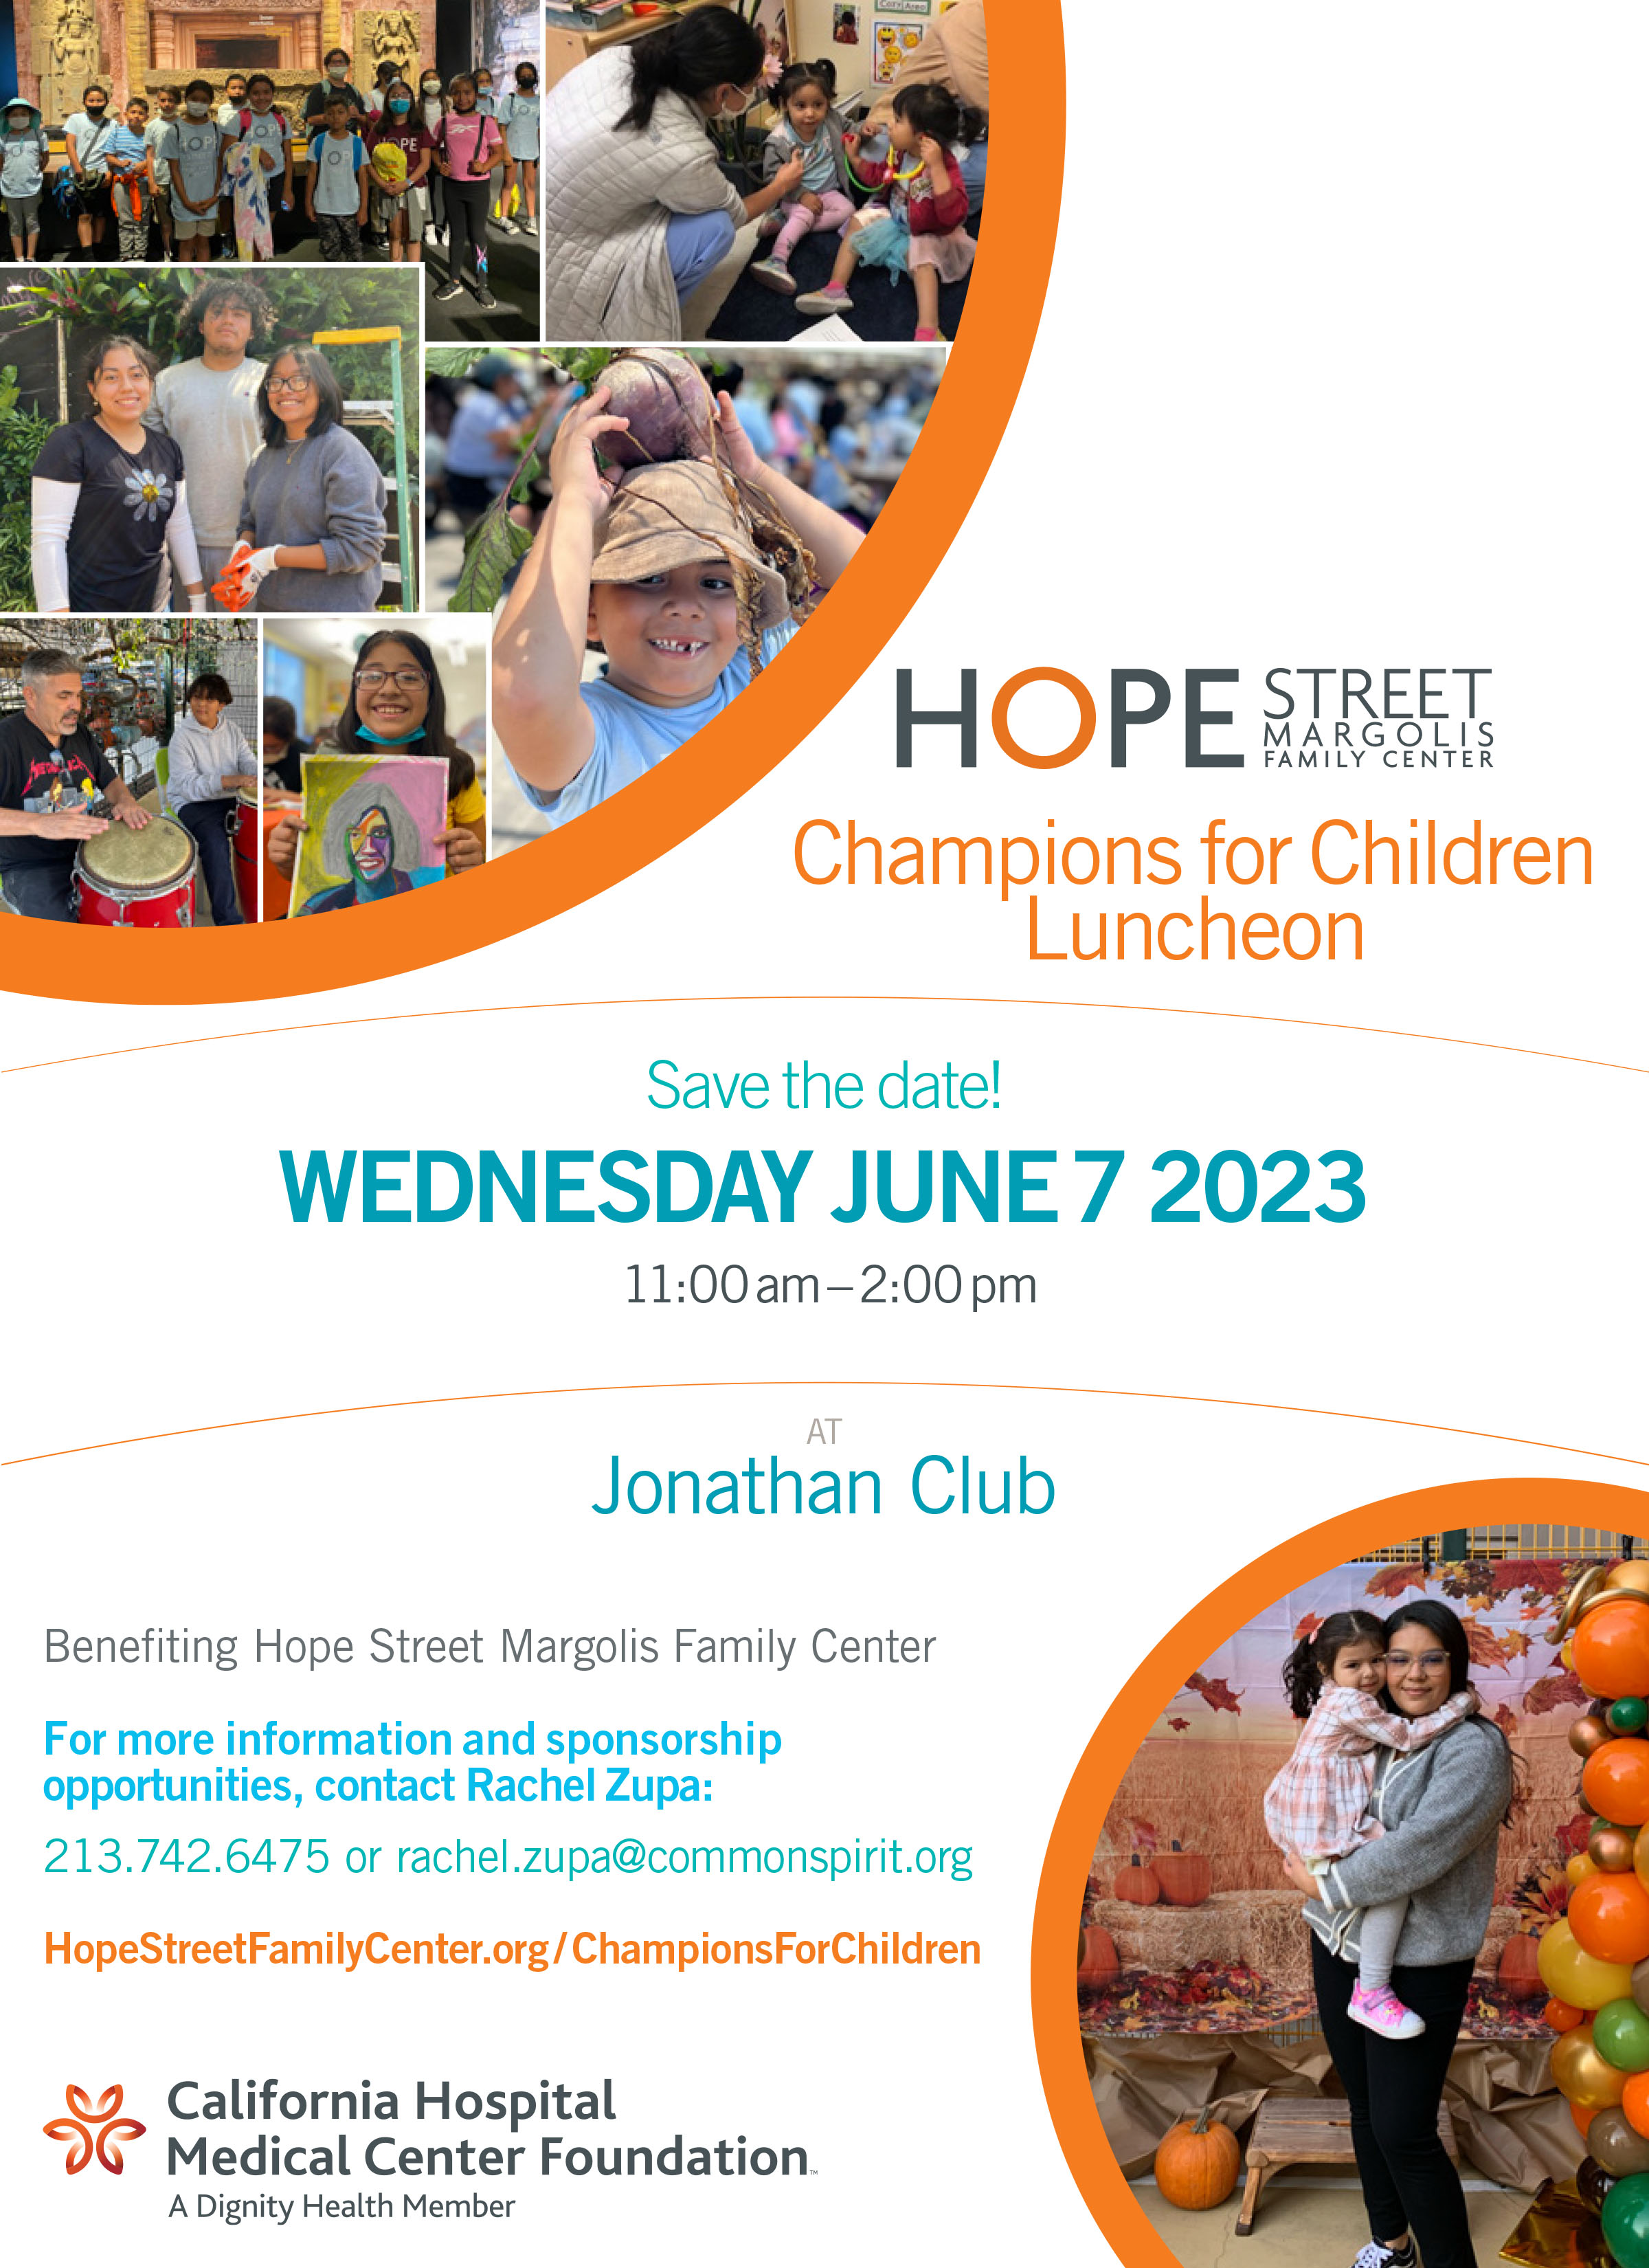 Champions for Children Luncheon returns Wednesday, June 7, 2023